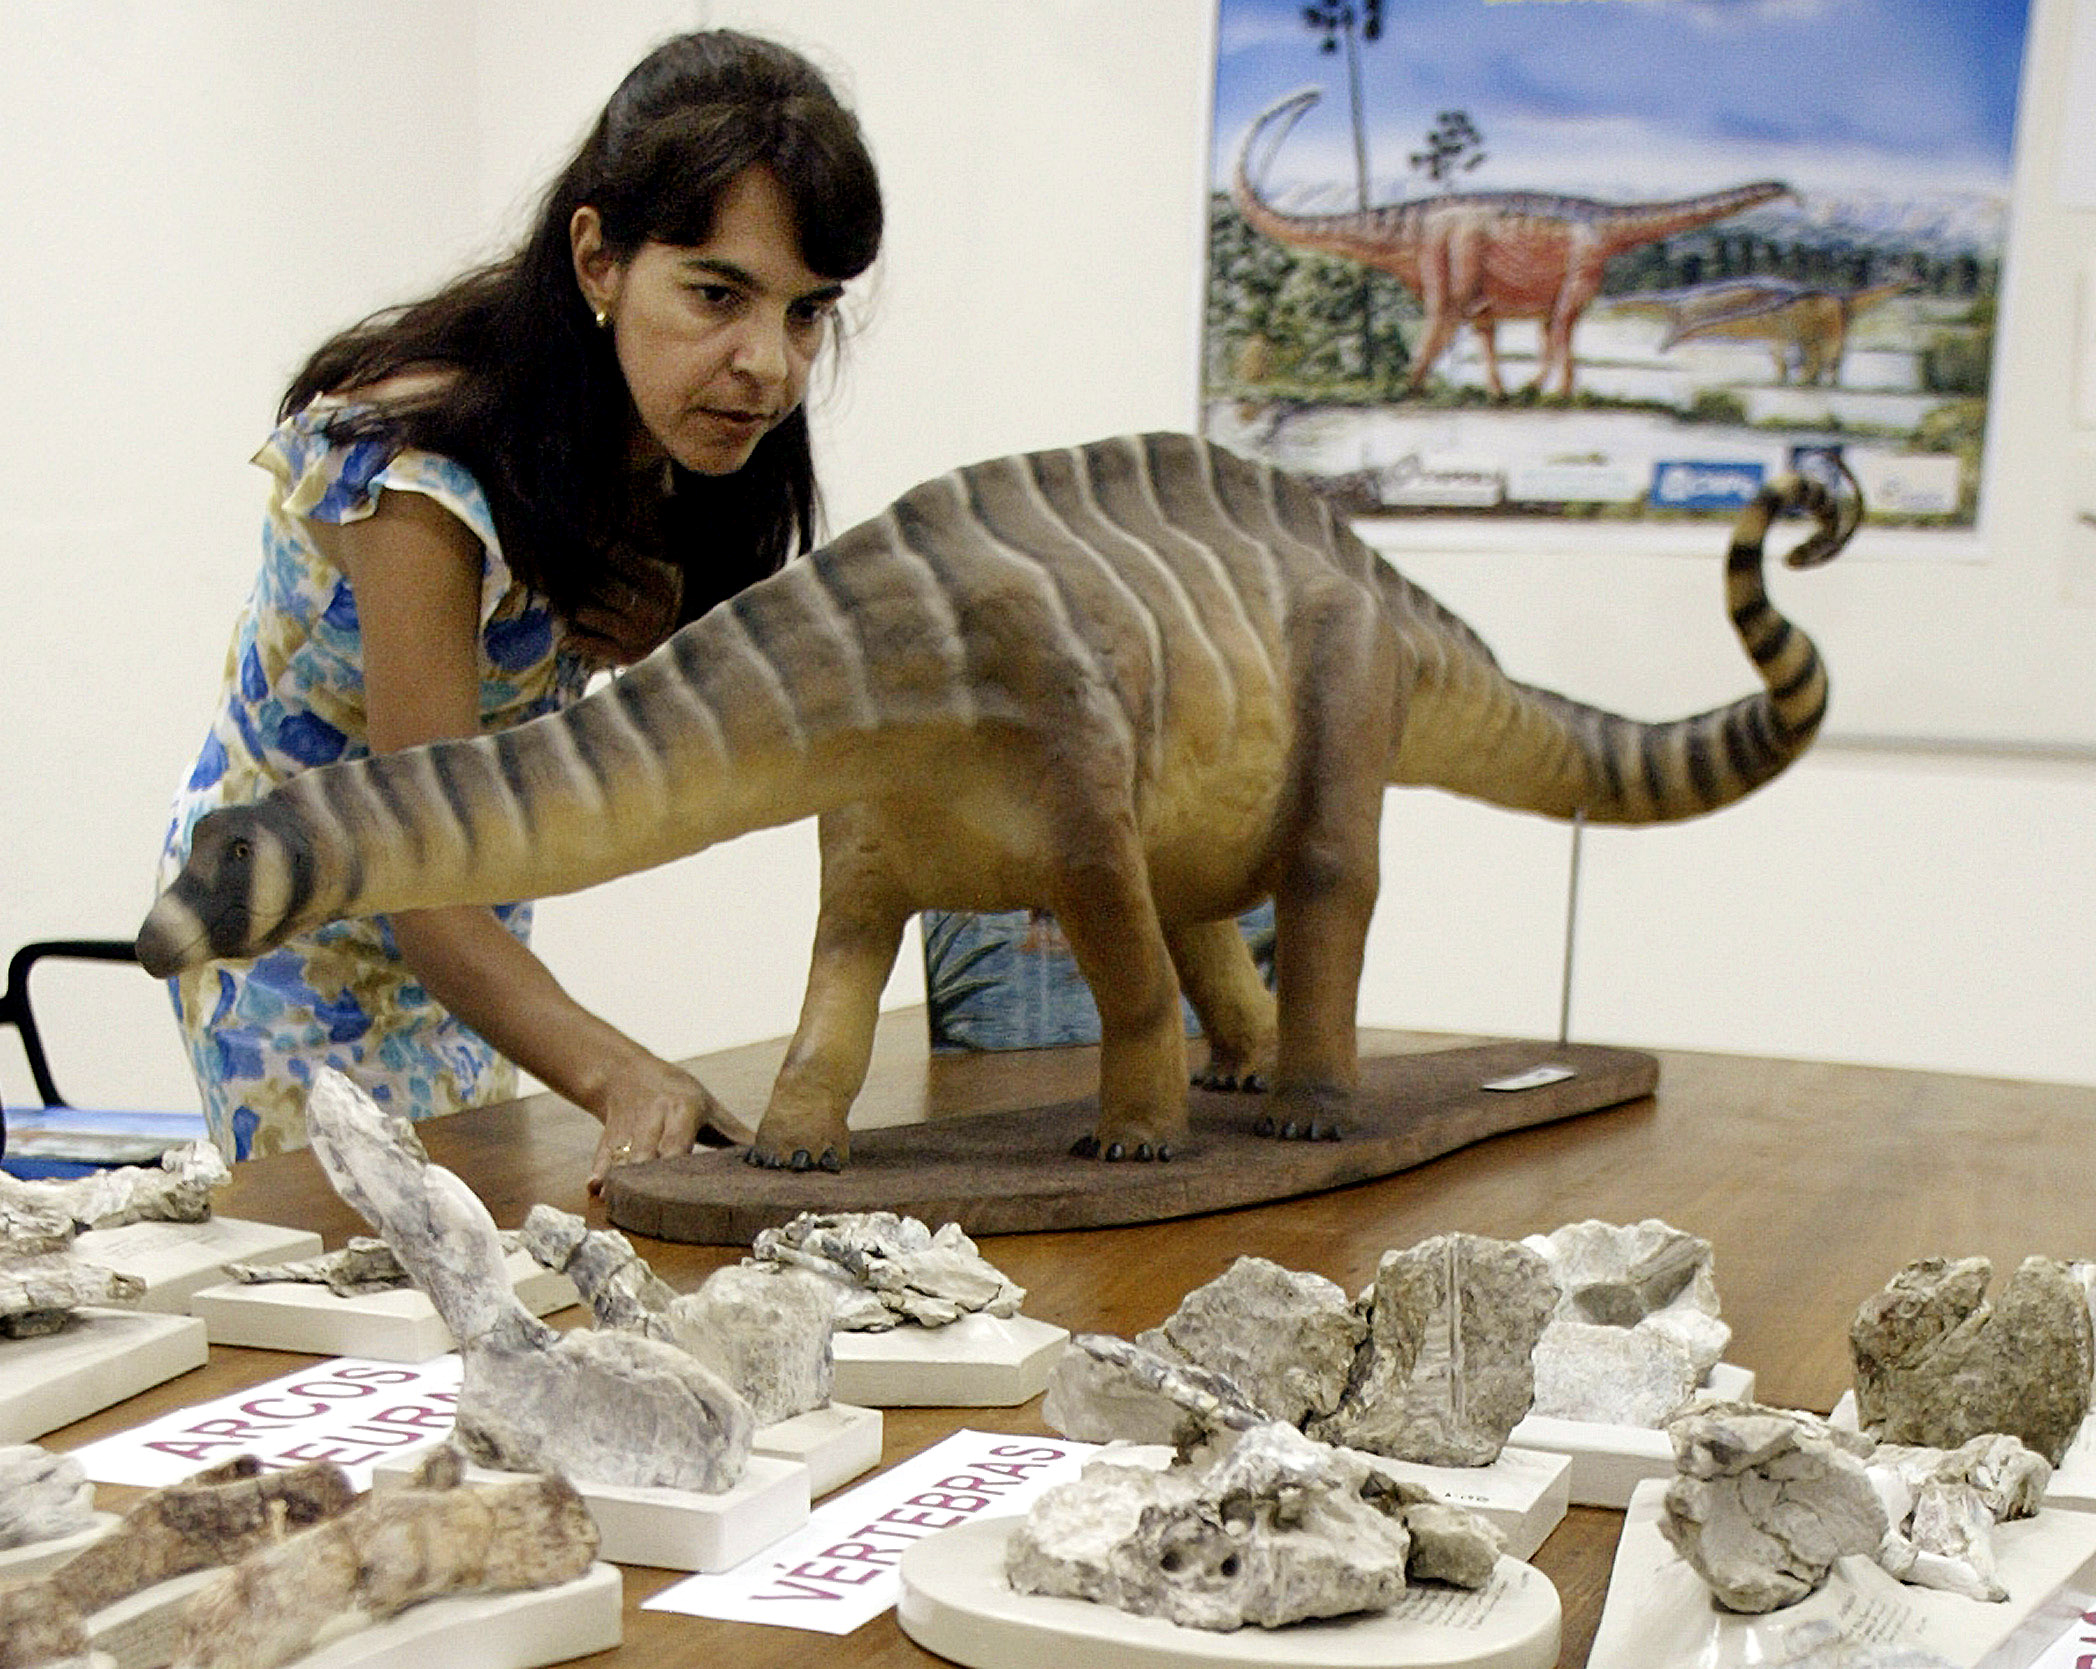 Dinosaur fossils found in the Amazon